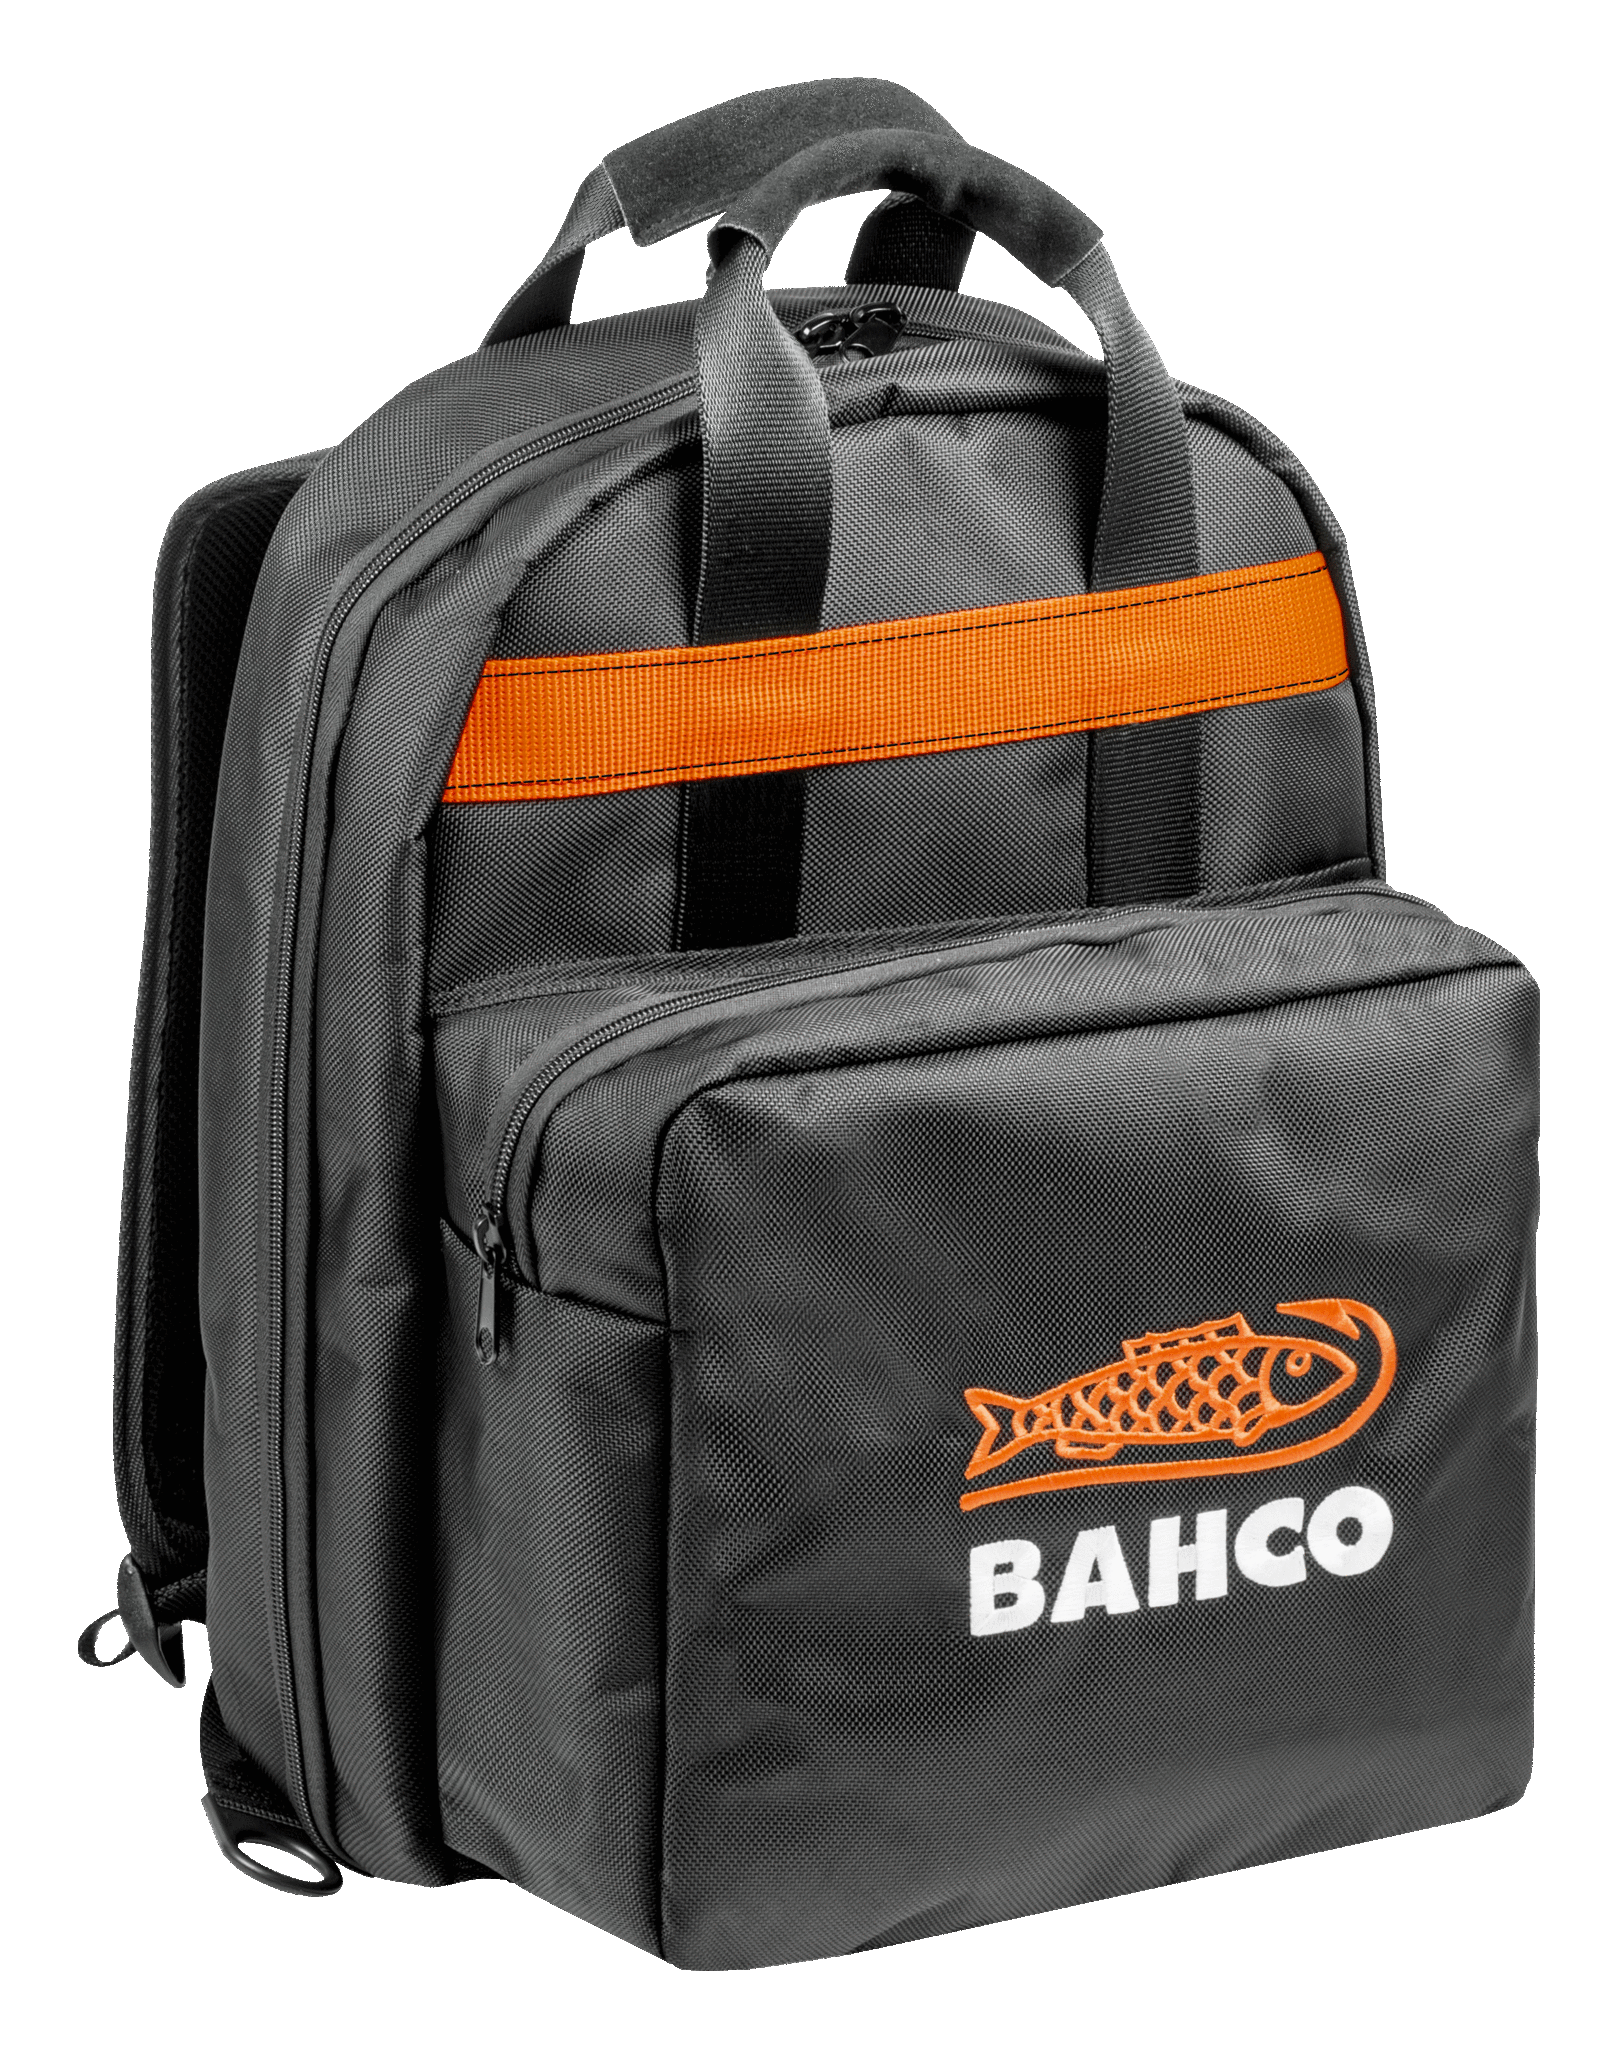 BAHCO(バーコ) Back Pack リュックサック スモール 3875-BP1 - 3